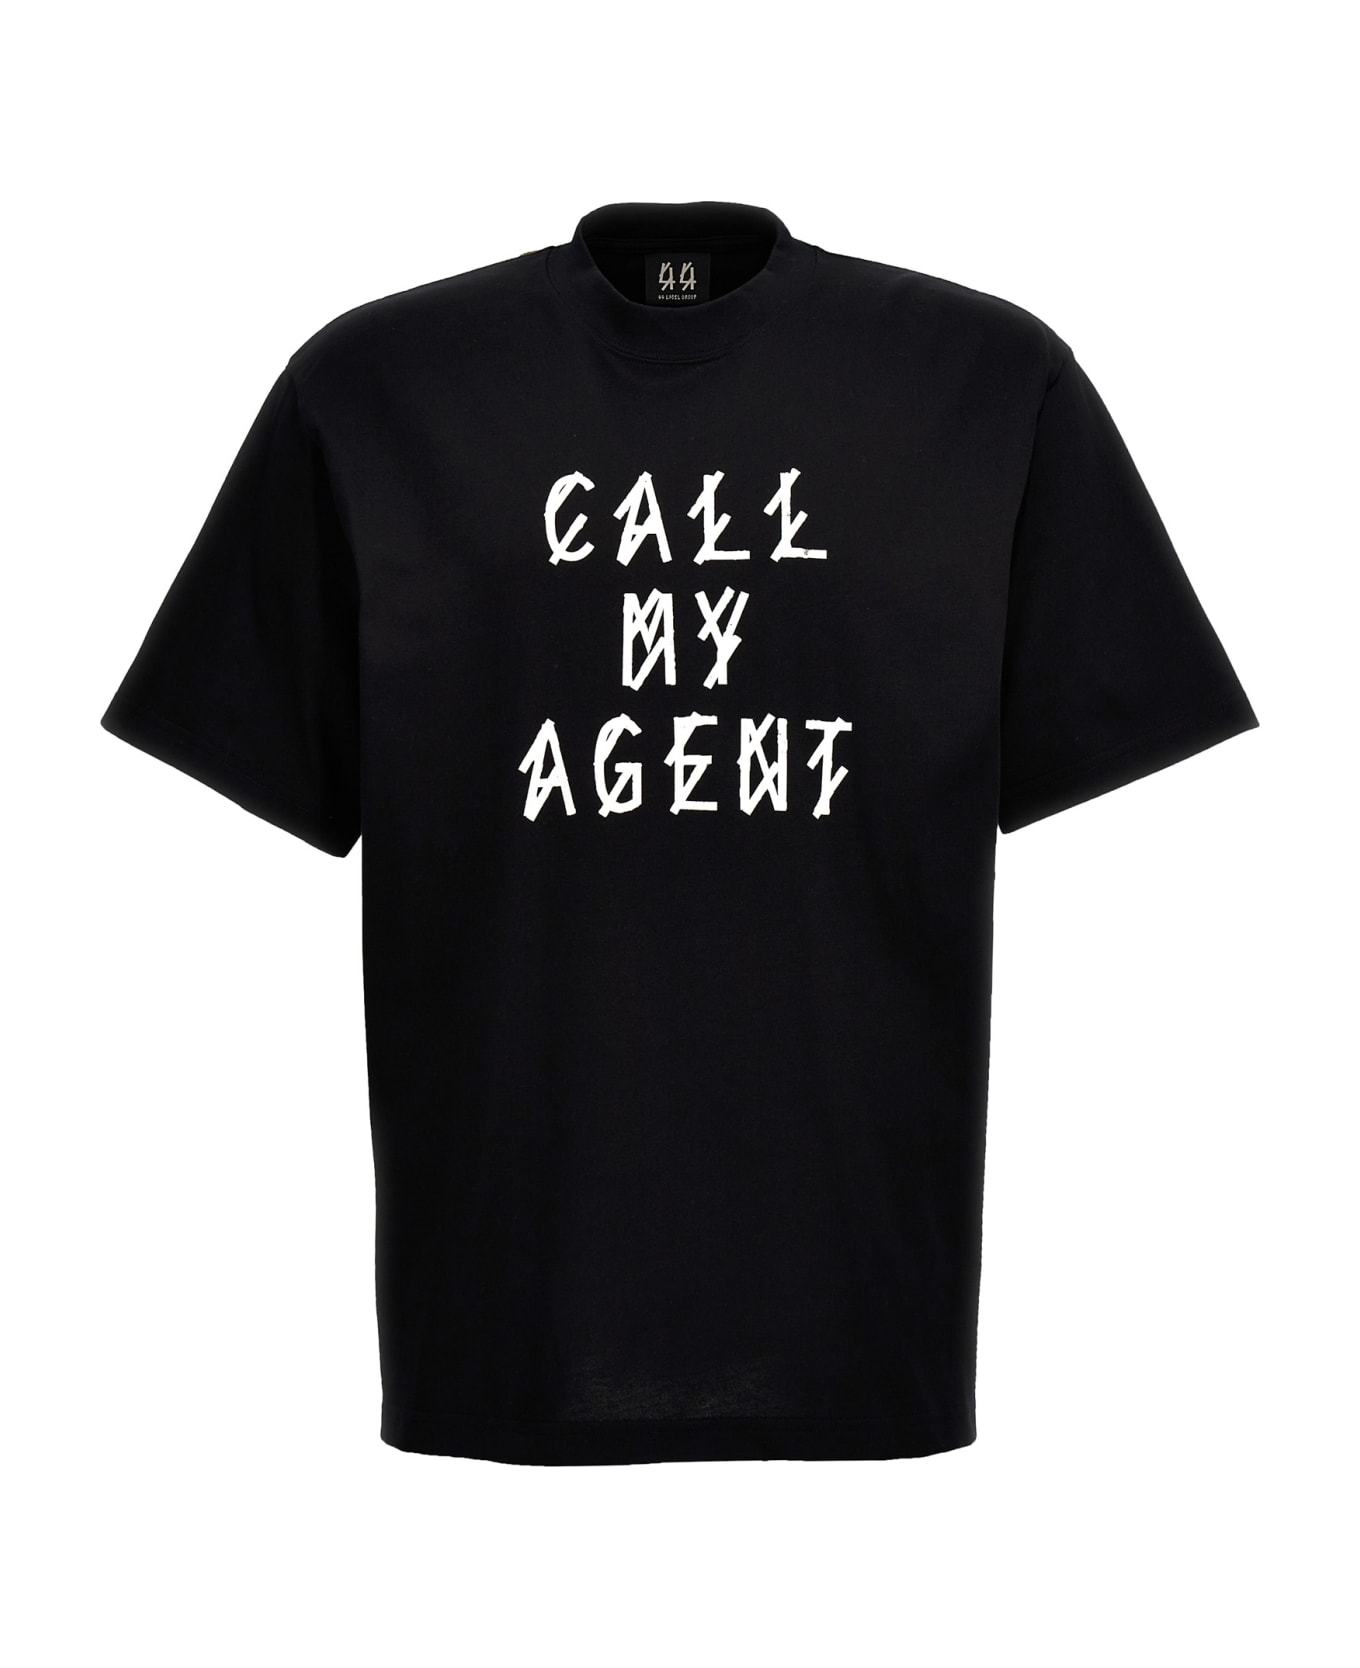 44 Label Group 'agent' T-shirt - Black  